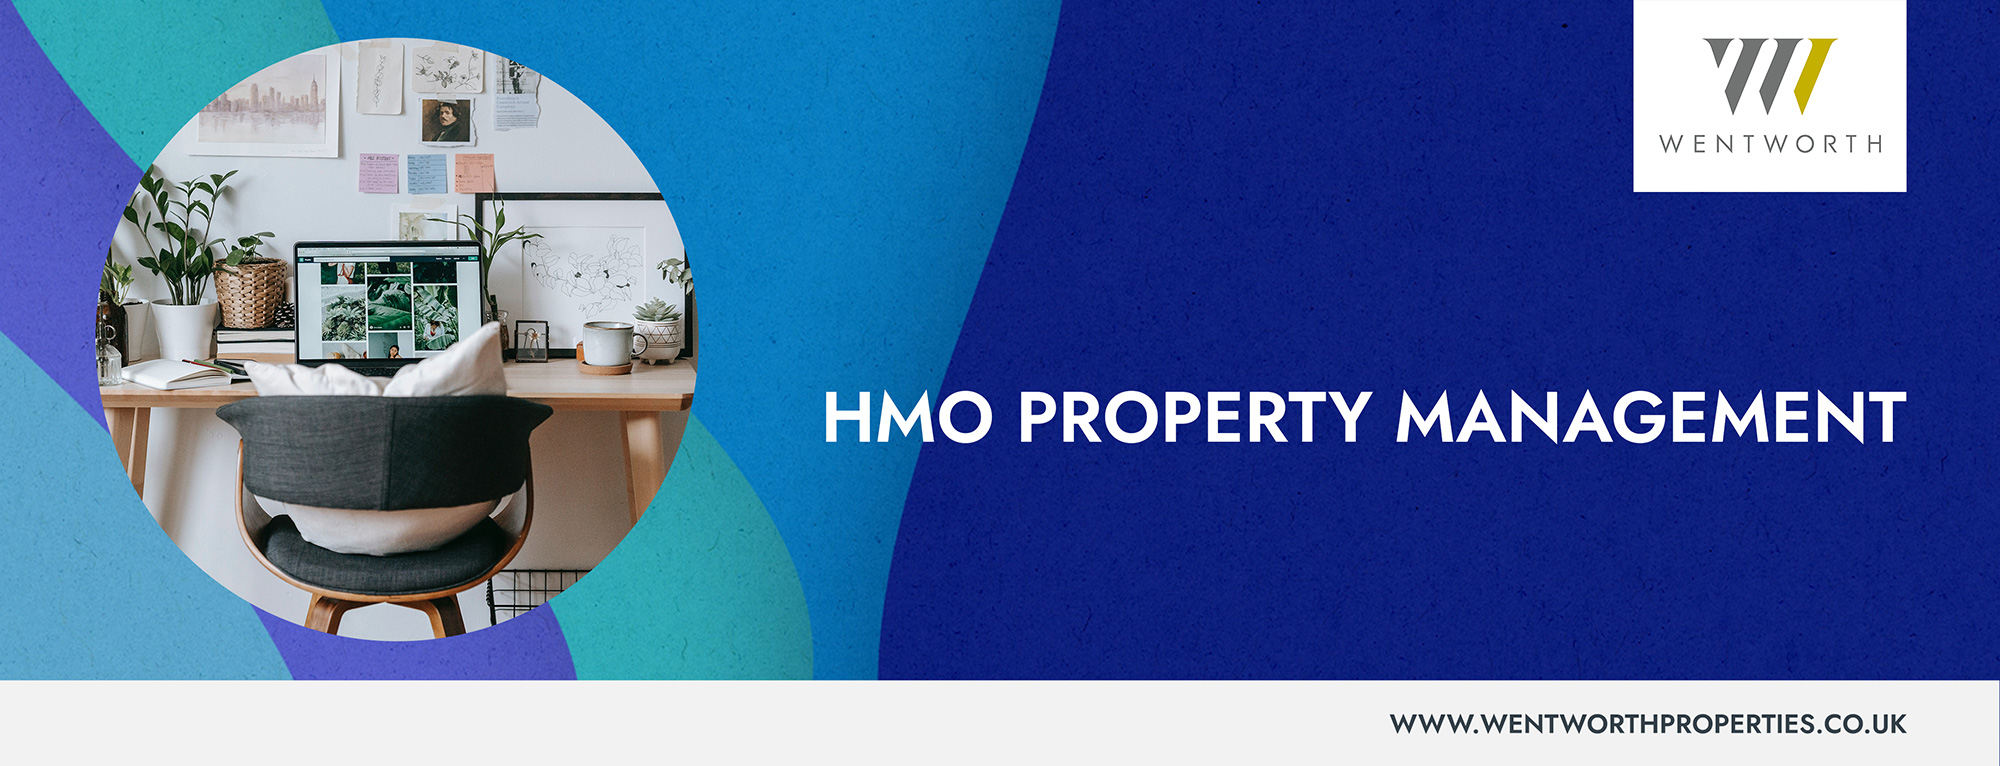 HMO property management